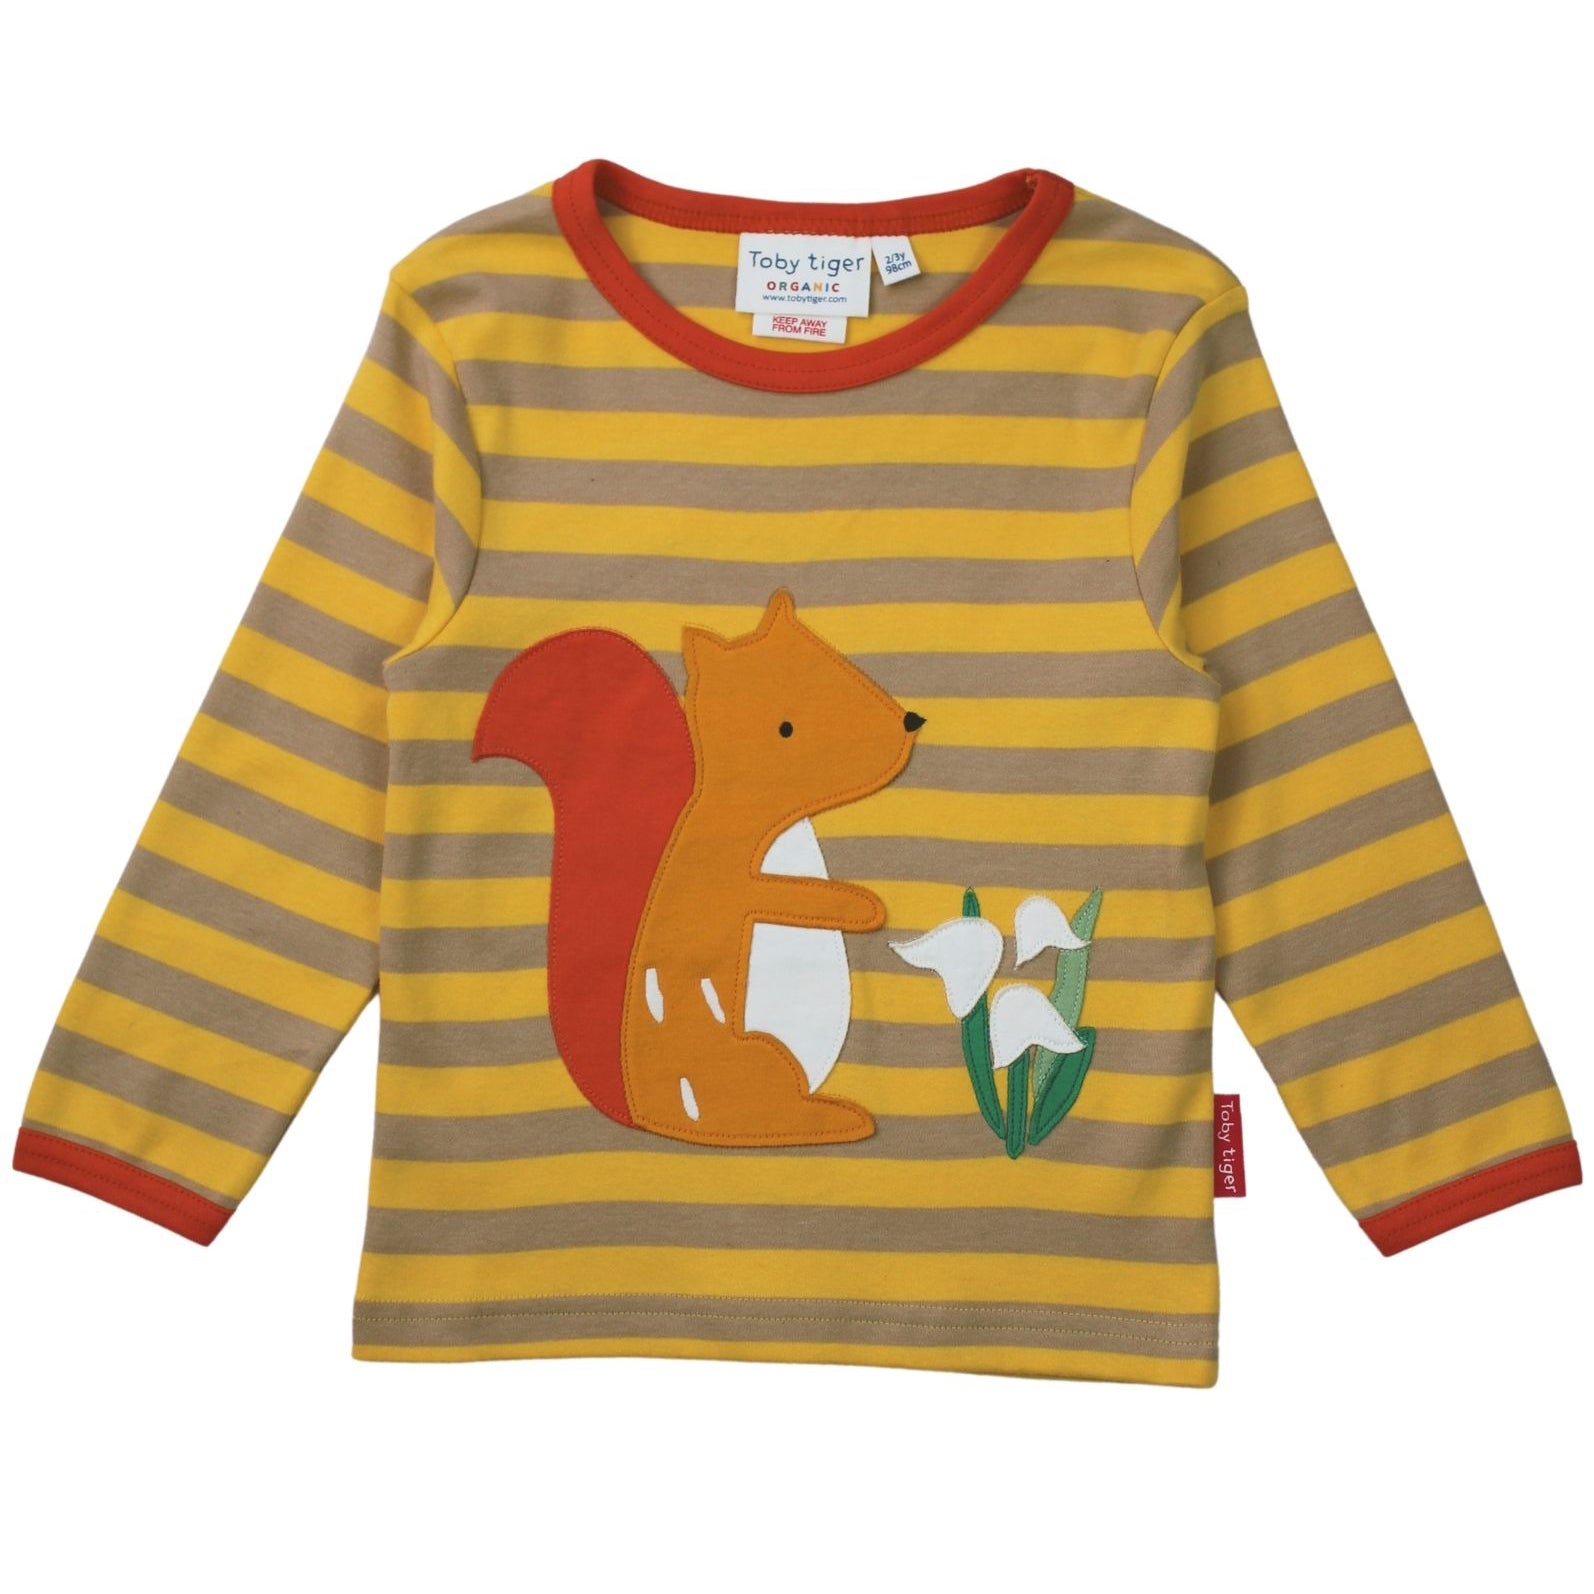 Toby Tiger organic Long sleeve t-shirt- squirrel appliqué